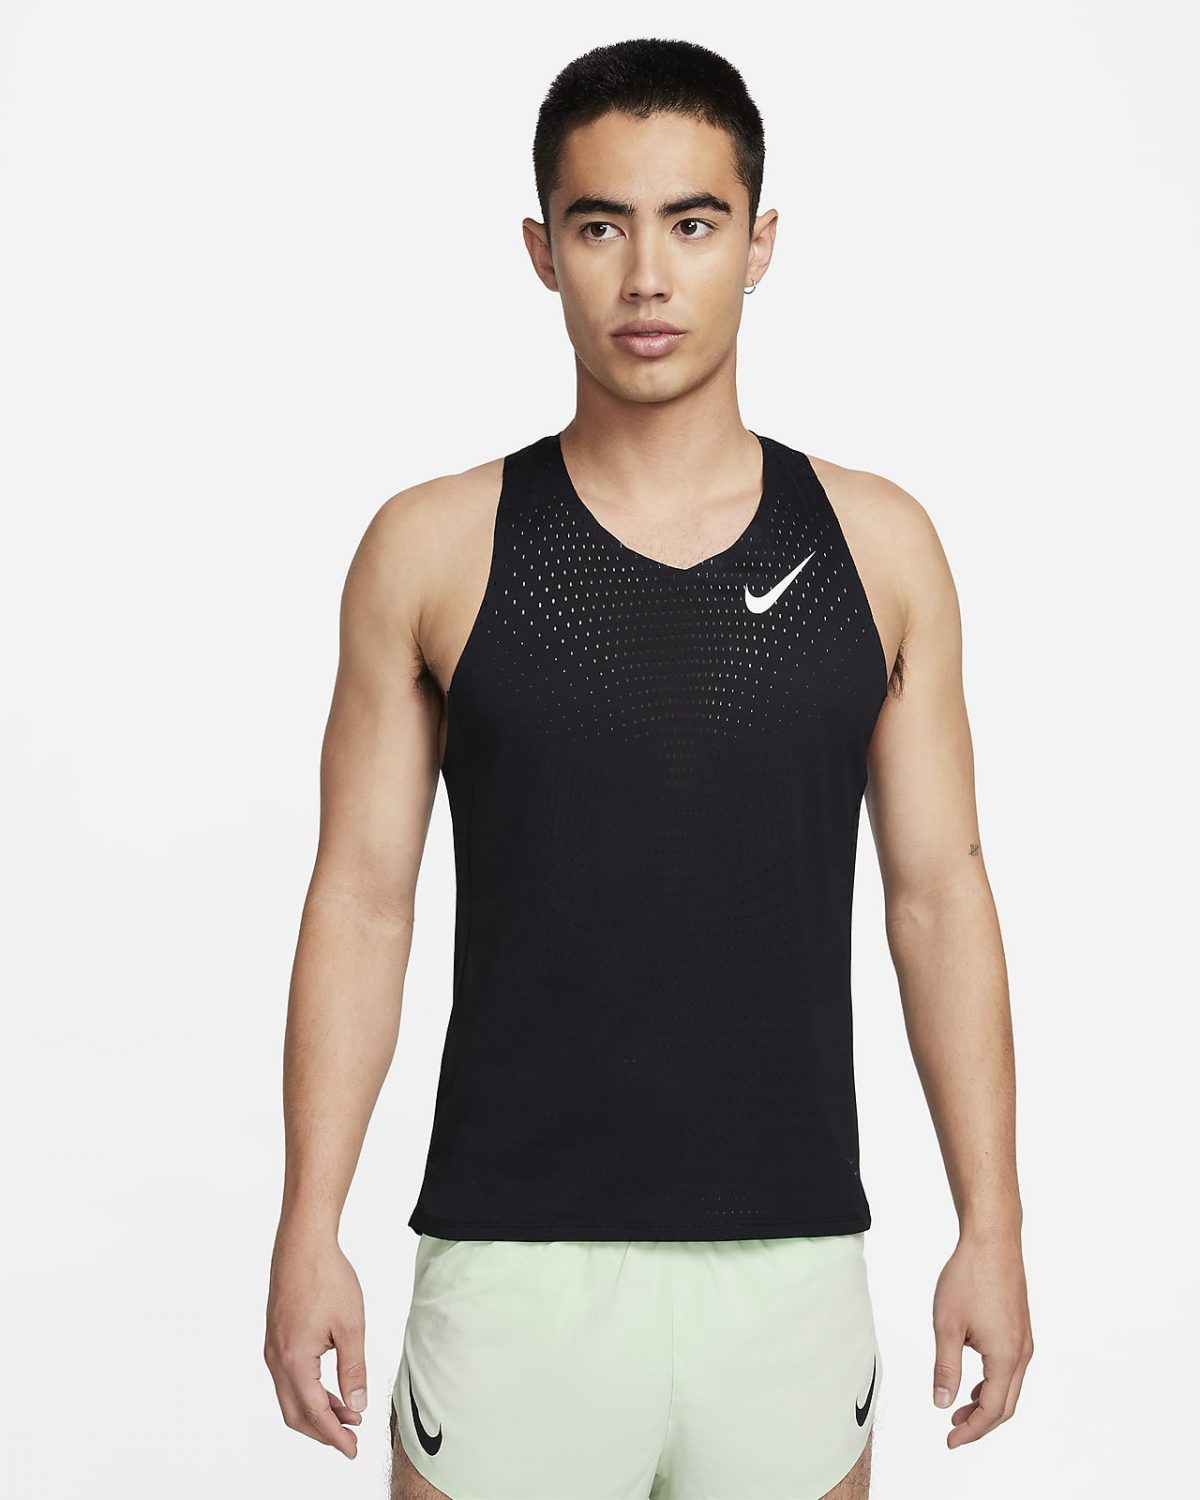 Мужская спортивная одежда Nike фото